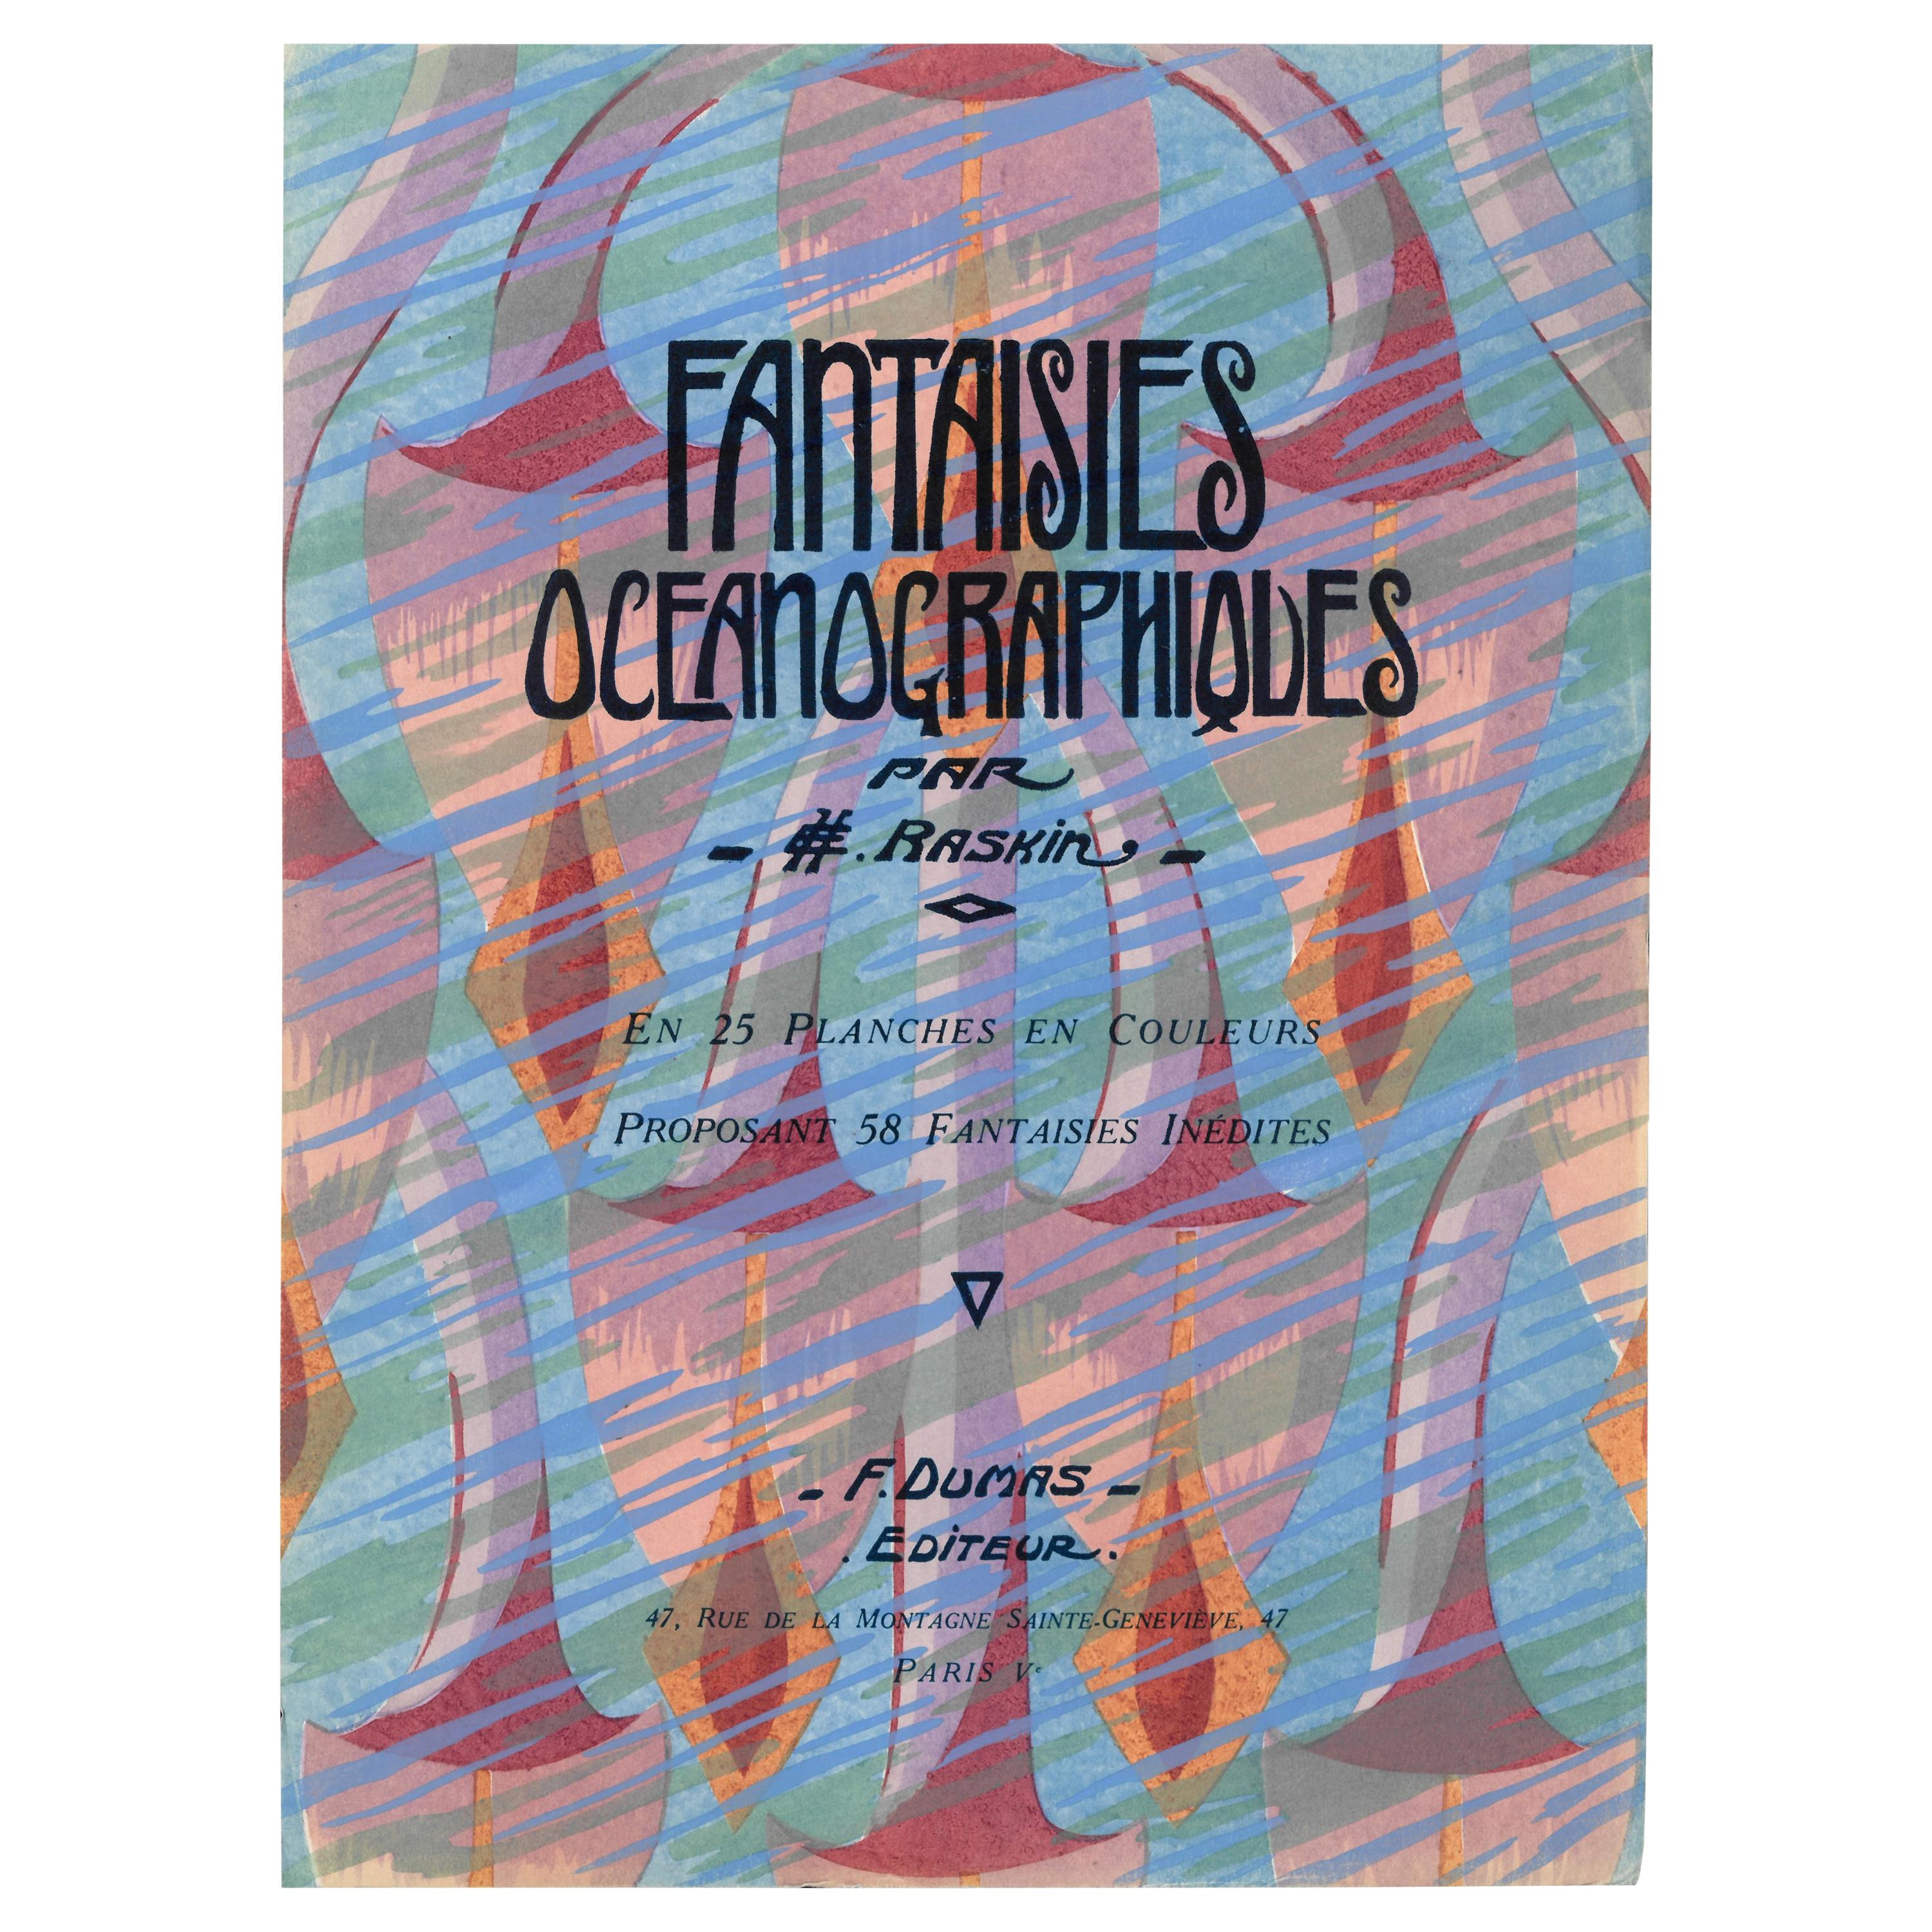 Fantaisies Oceanographiques - Collection of Art Deco Ocean Fantasies Designs